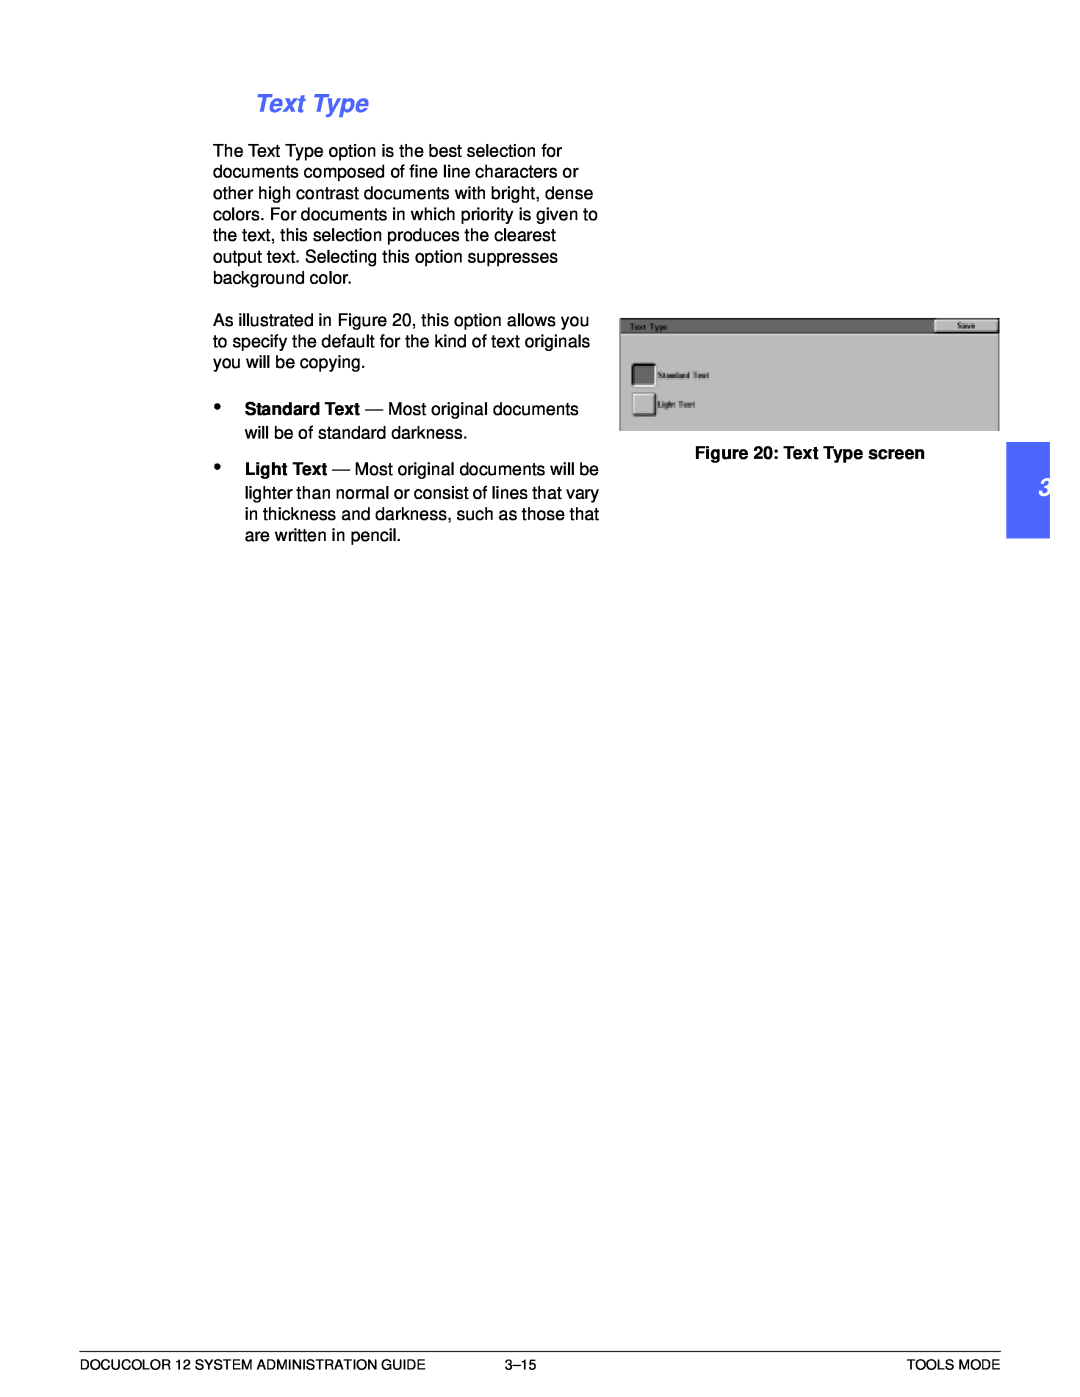 Xerox a2 manual 1 2 3 4 5 6 7, Text Type screen 